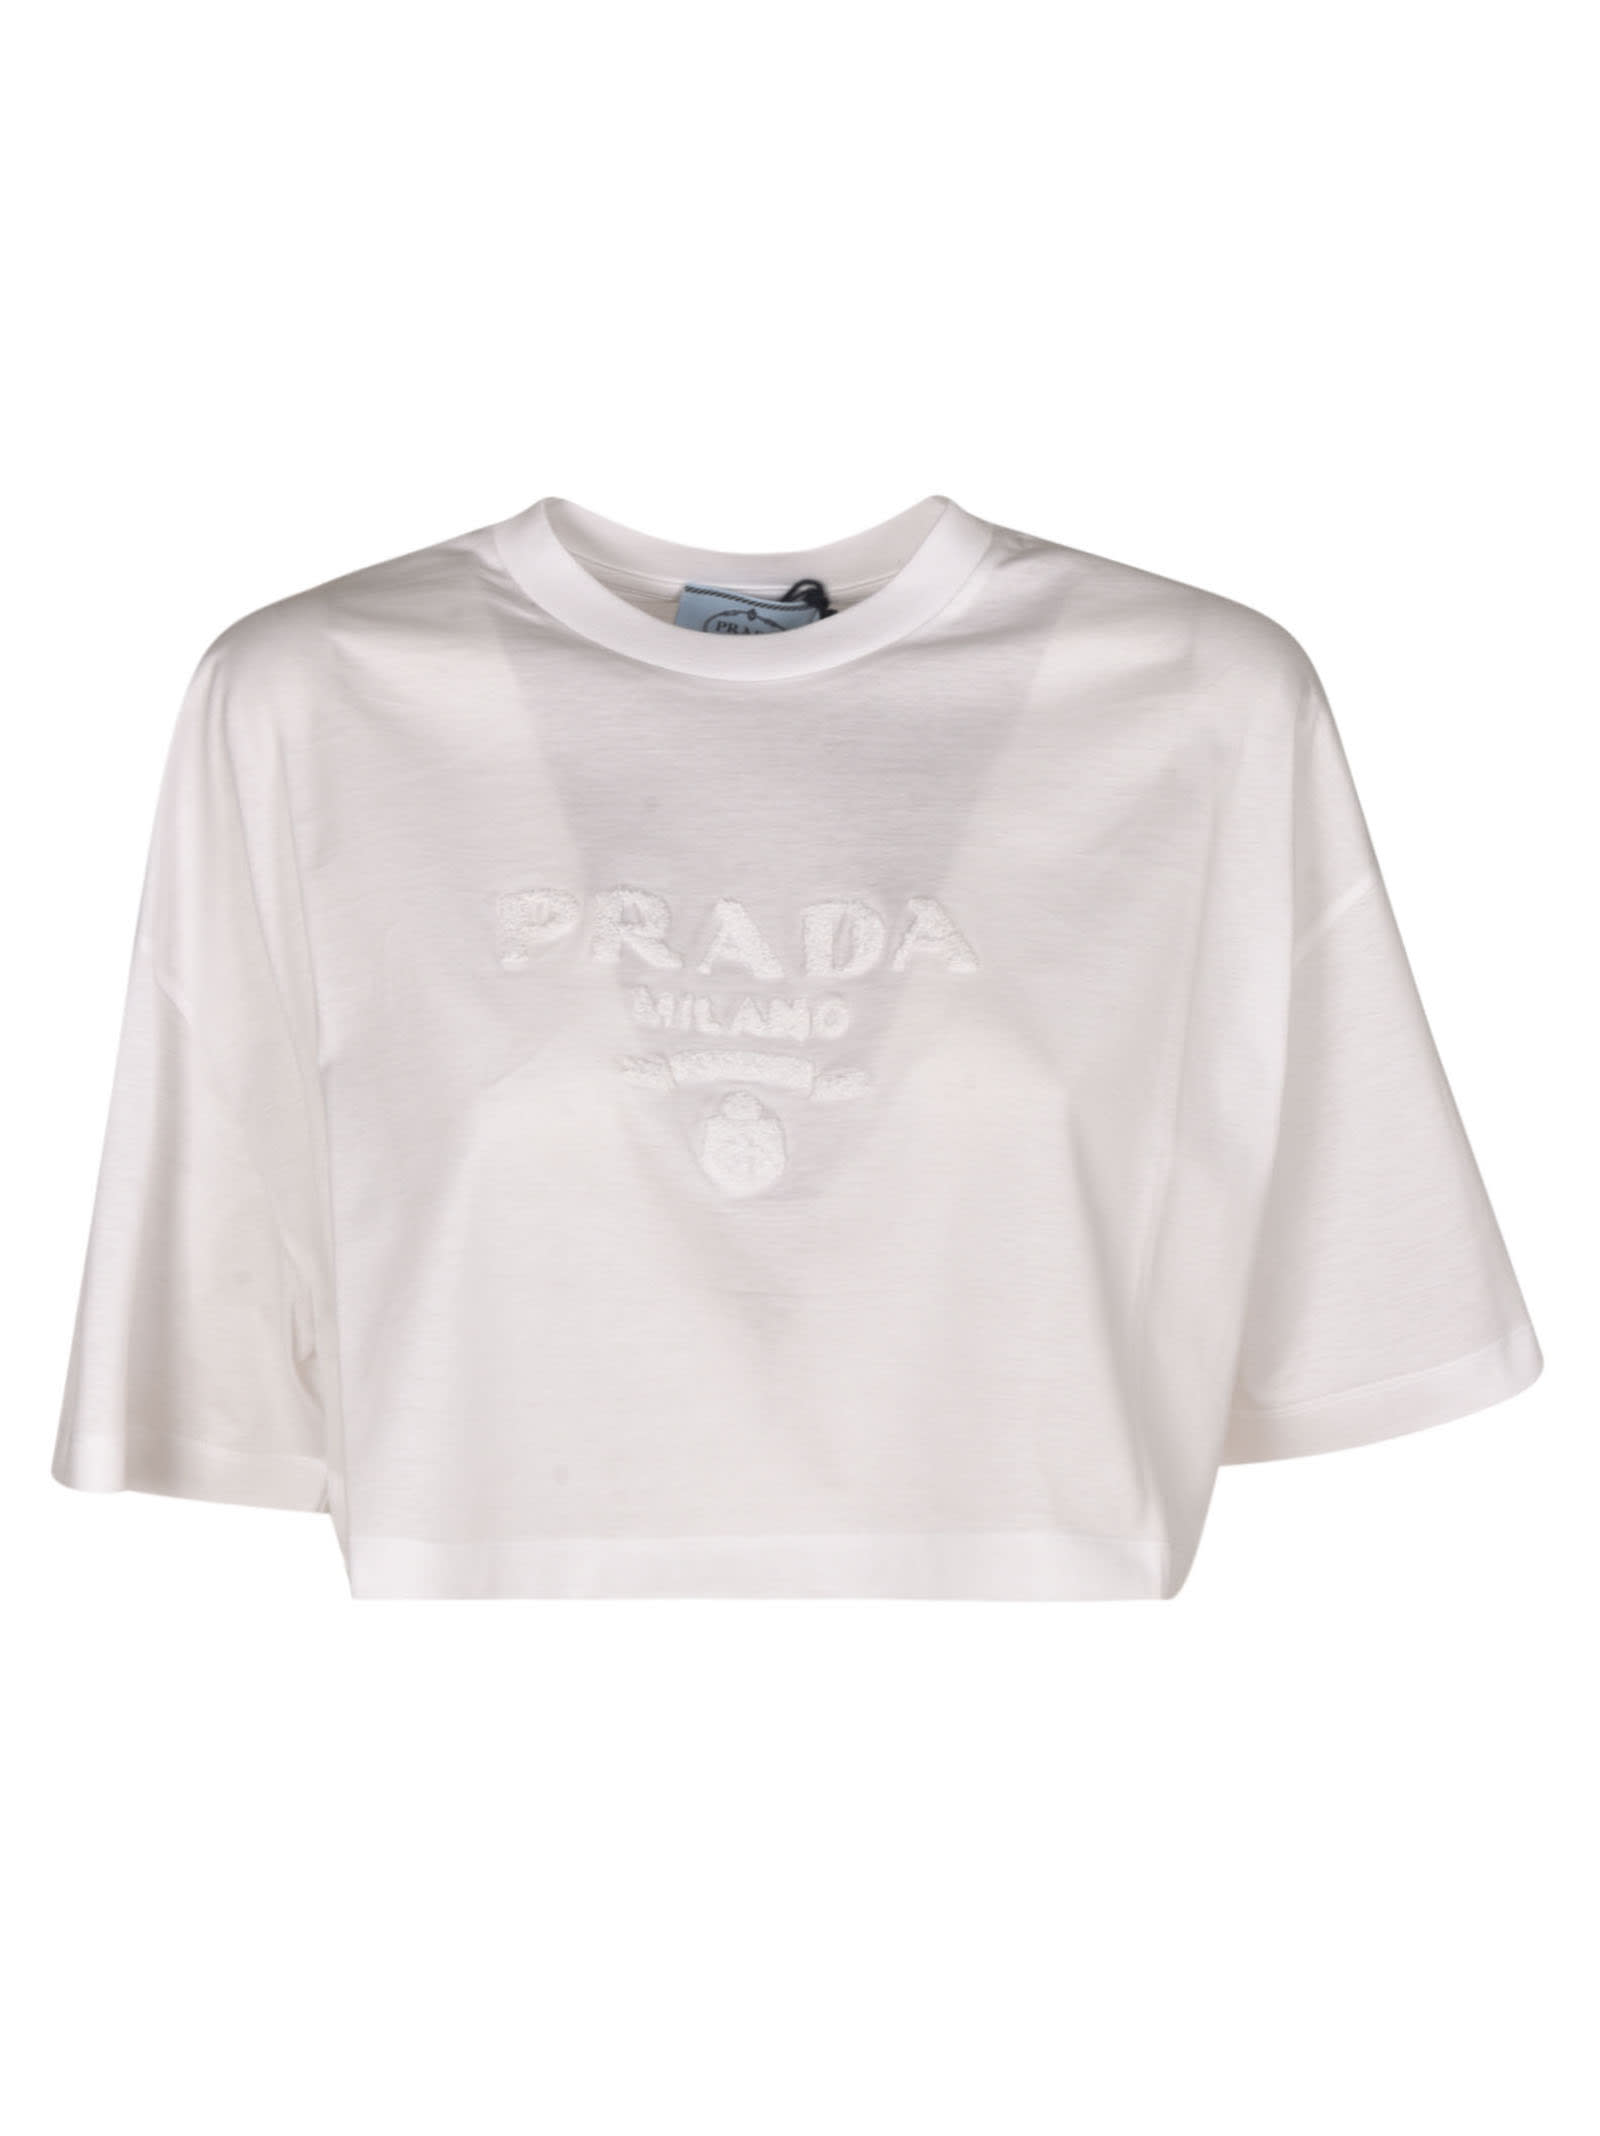 Prada Logo Embroidered Cropped T-shirt